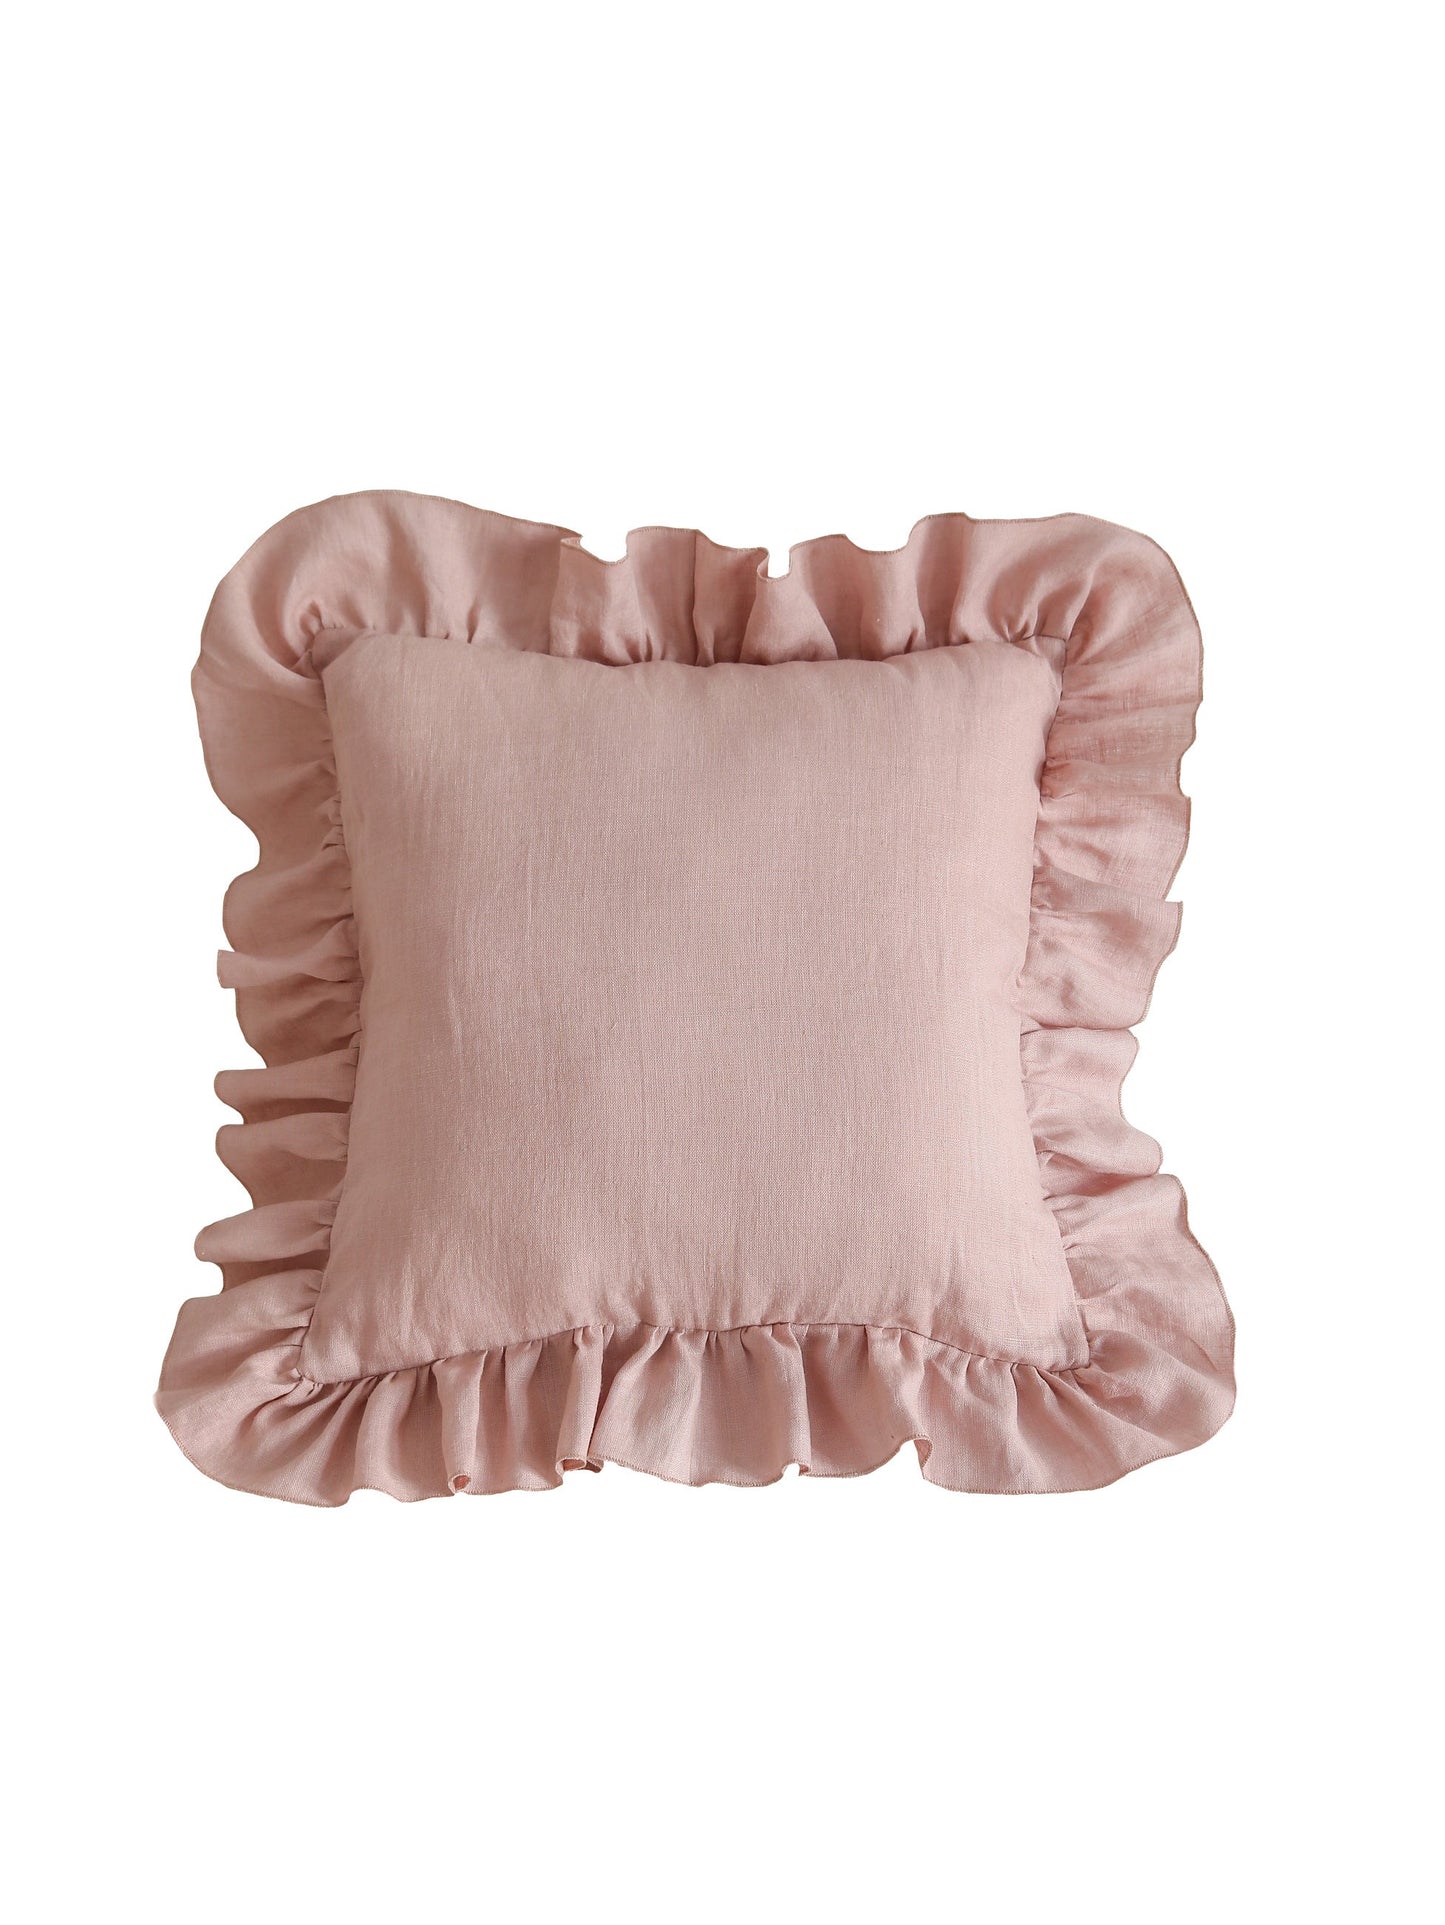 Linen “Powder Pink” Pillow with Frill